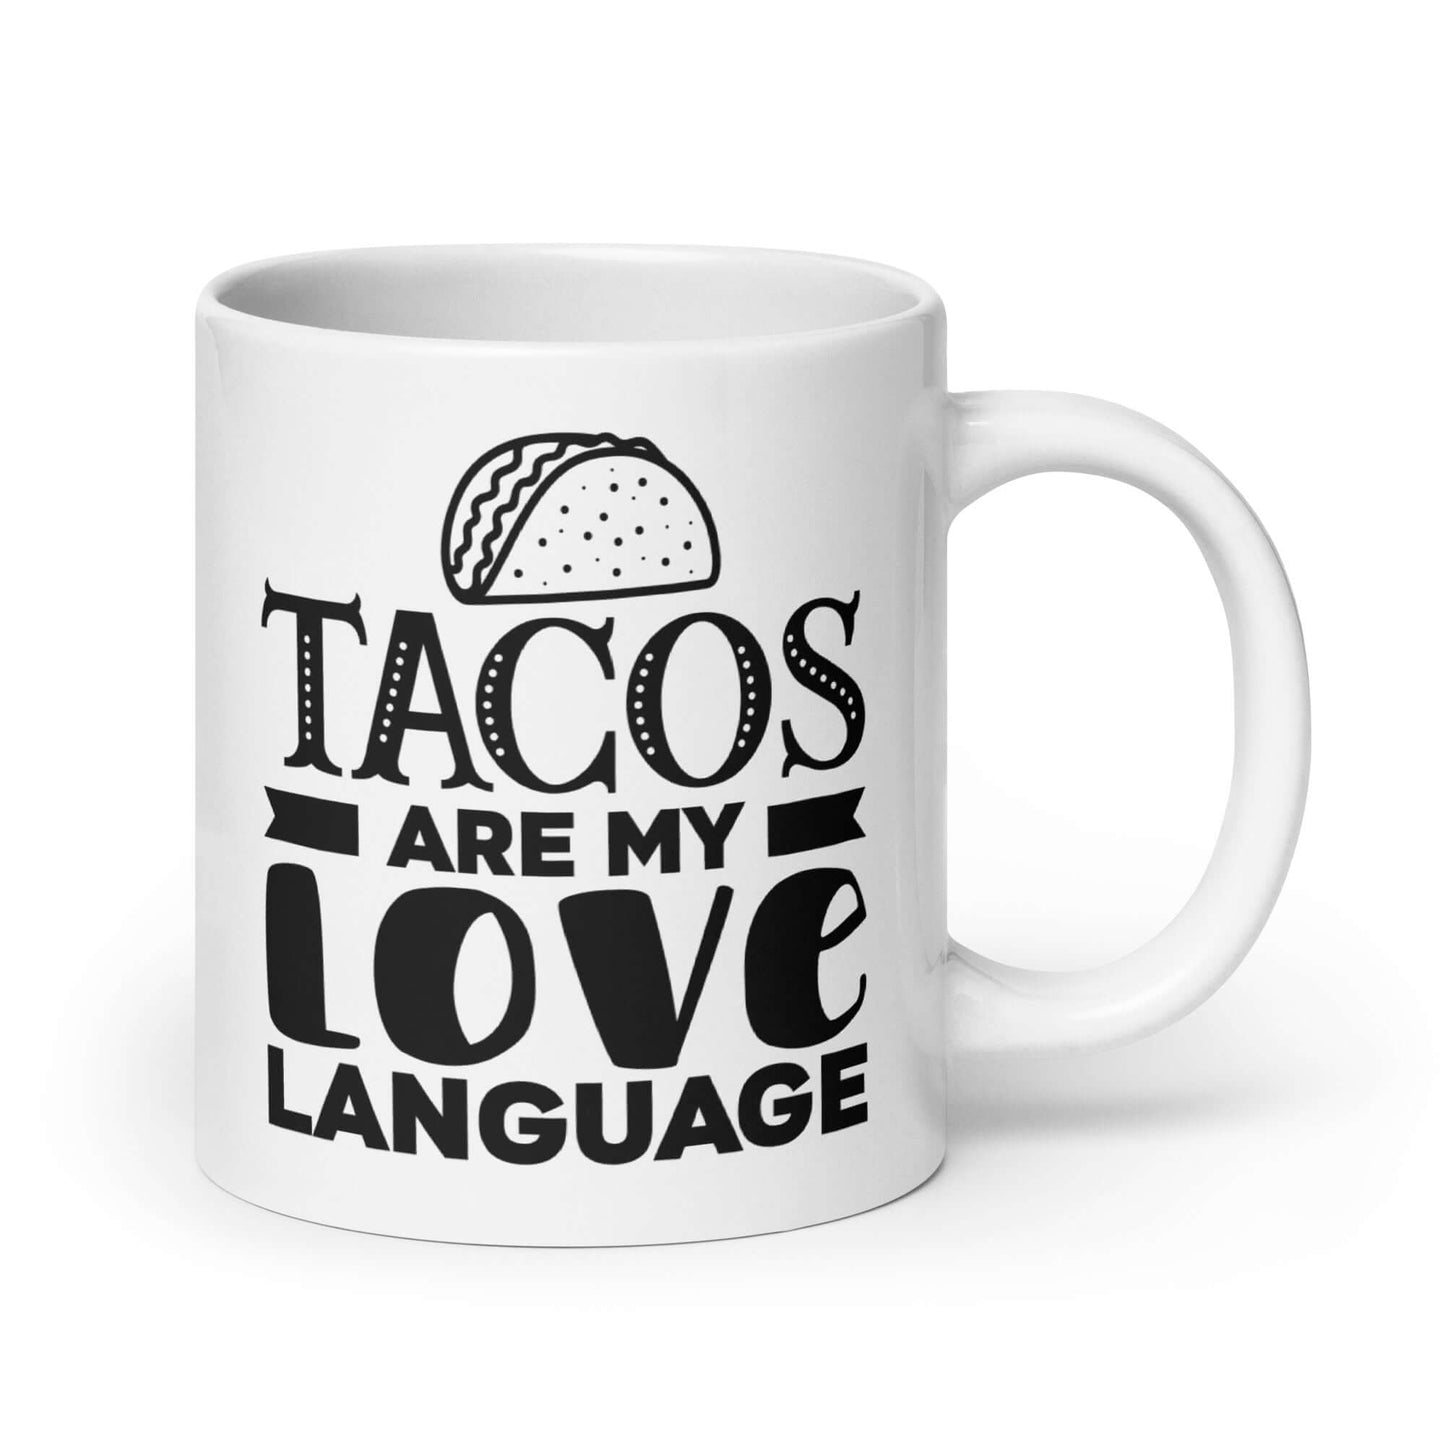 Tacos are my love language funny self help relationship humor mug